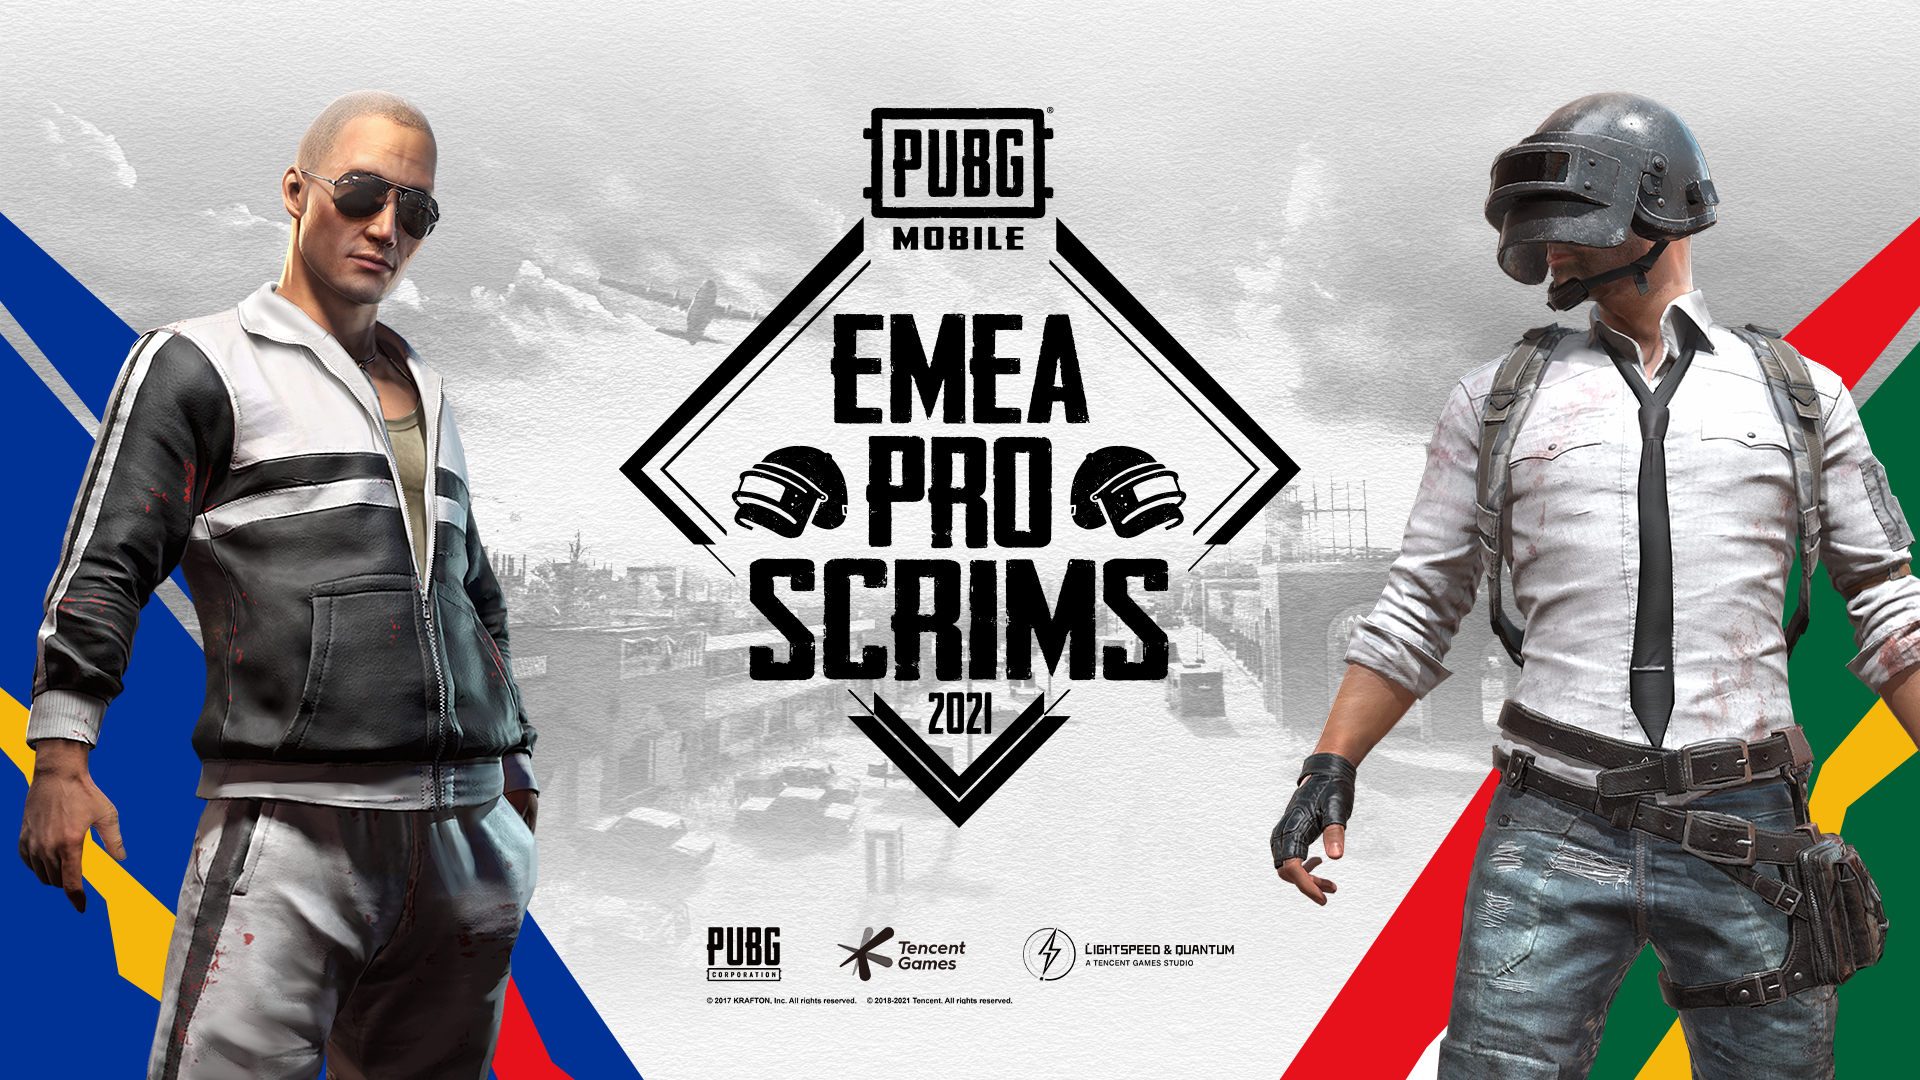 Watch EMEA teams SCRIMS live with new PUBG MOBILE Scrims events